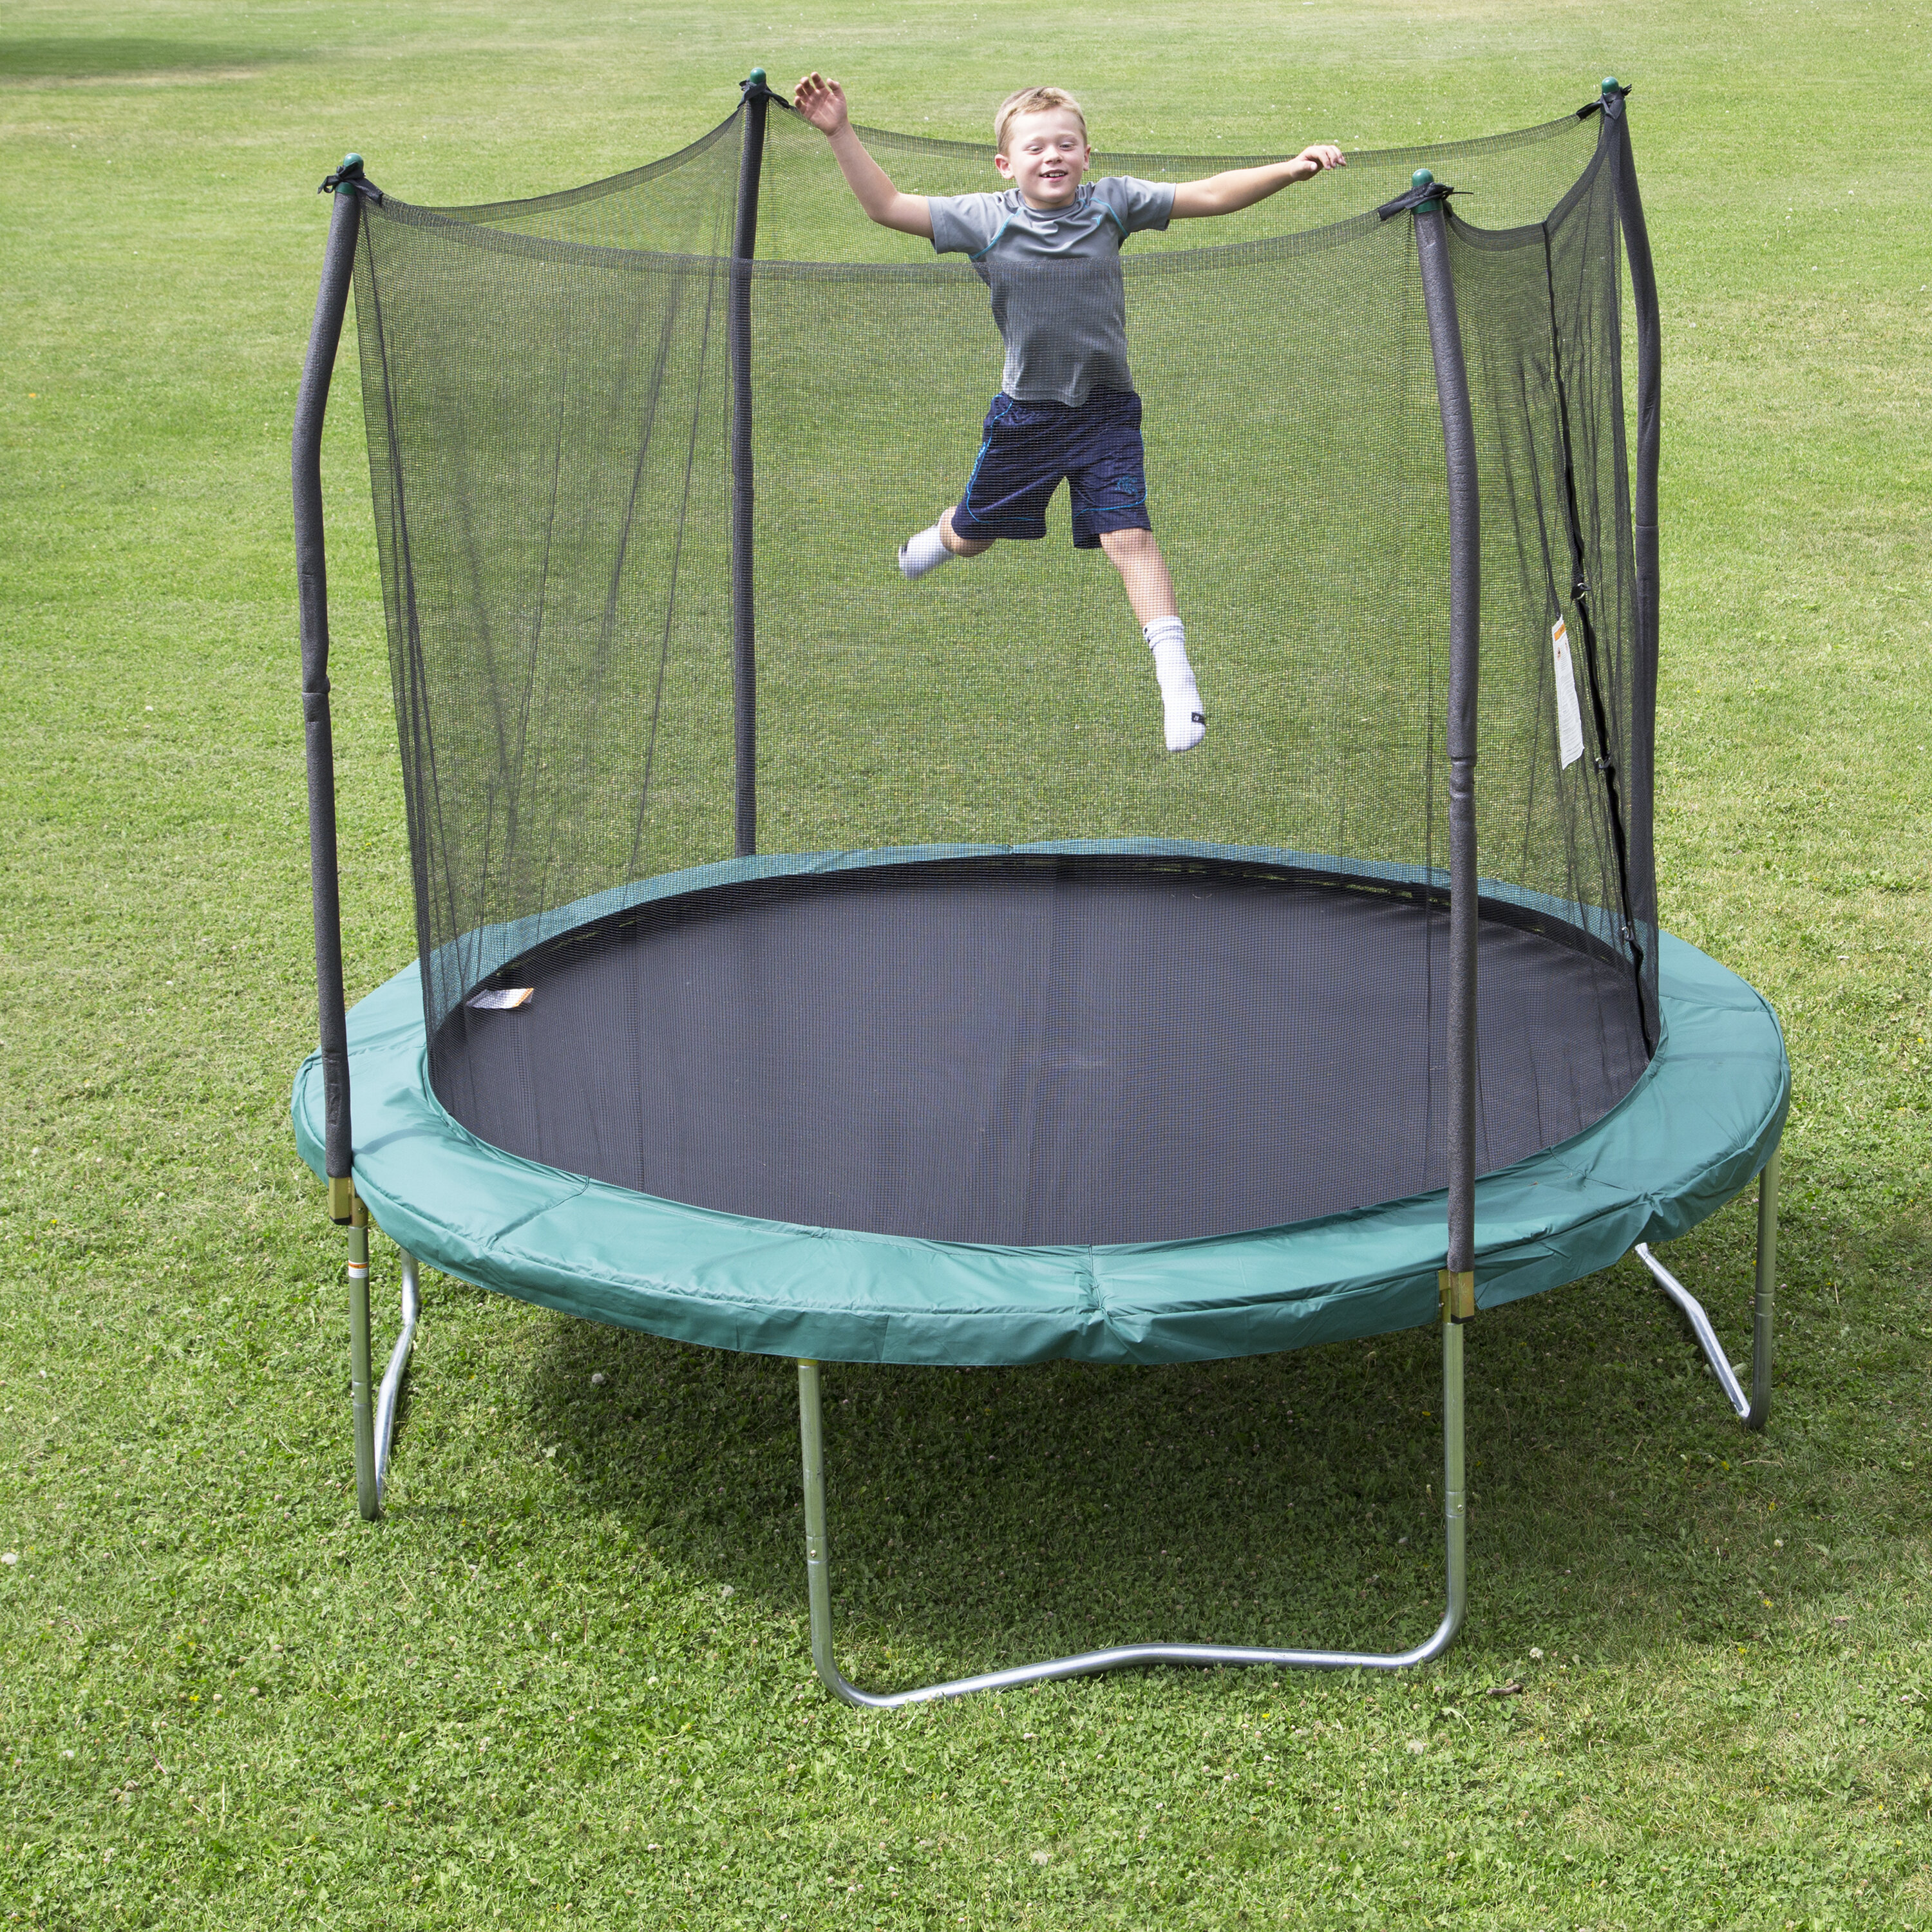 Skywalker Trampolines 10ft Round Trampoline With Enclosure – Green